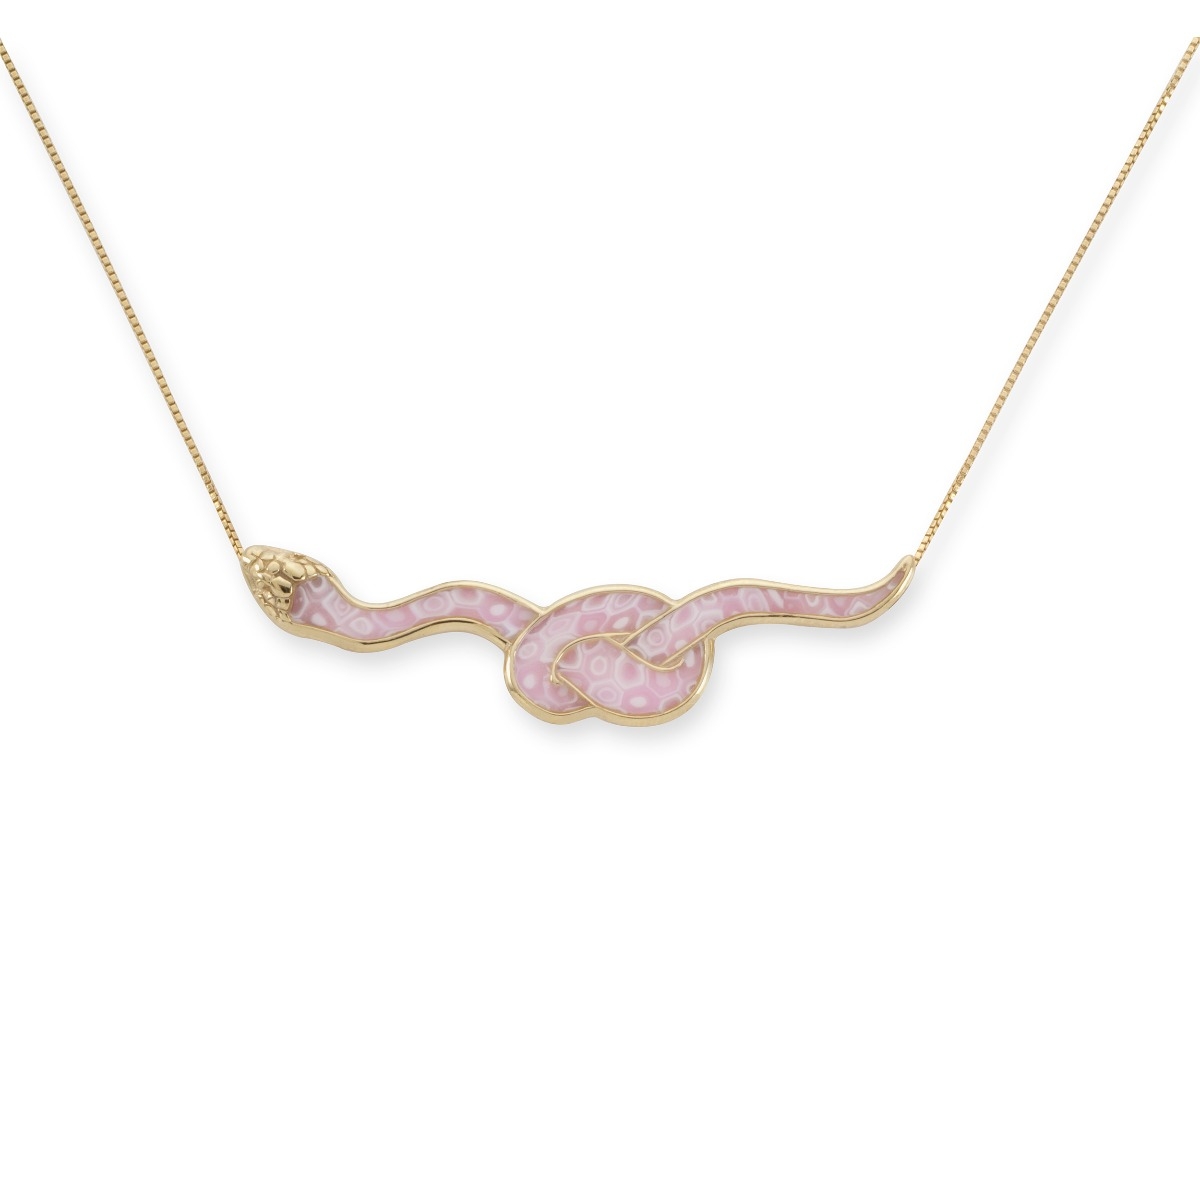 Adina Plastelina 24K Gold Plated Sterling Silver Snake Necklace – Rose Quartz - 1